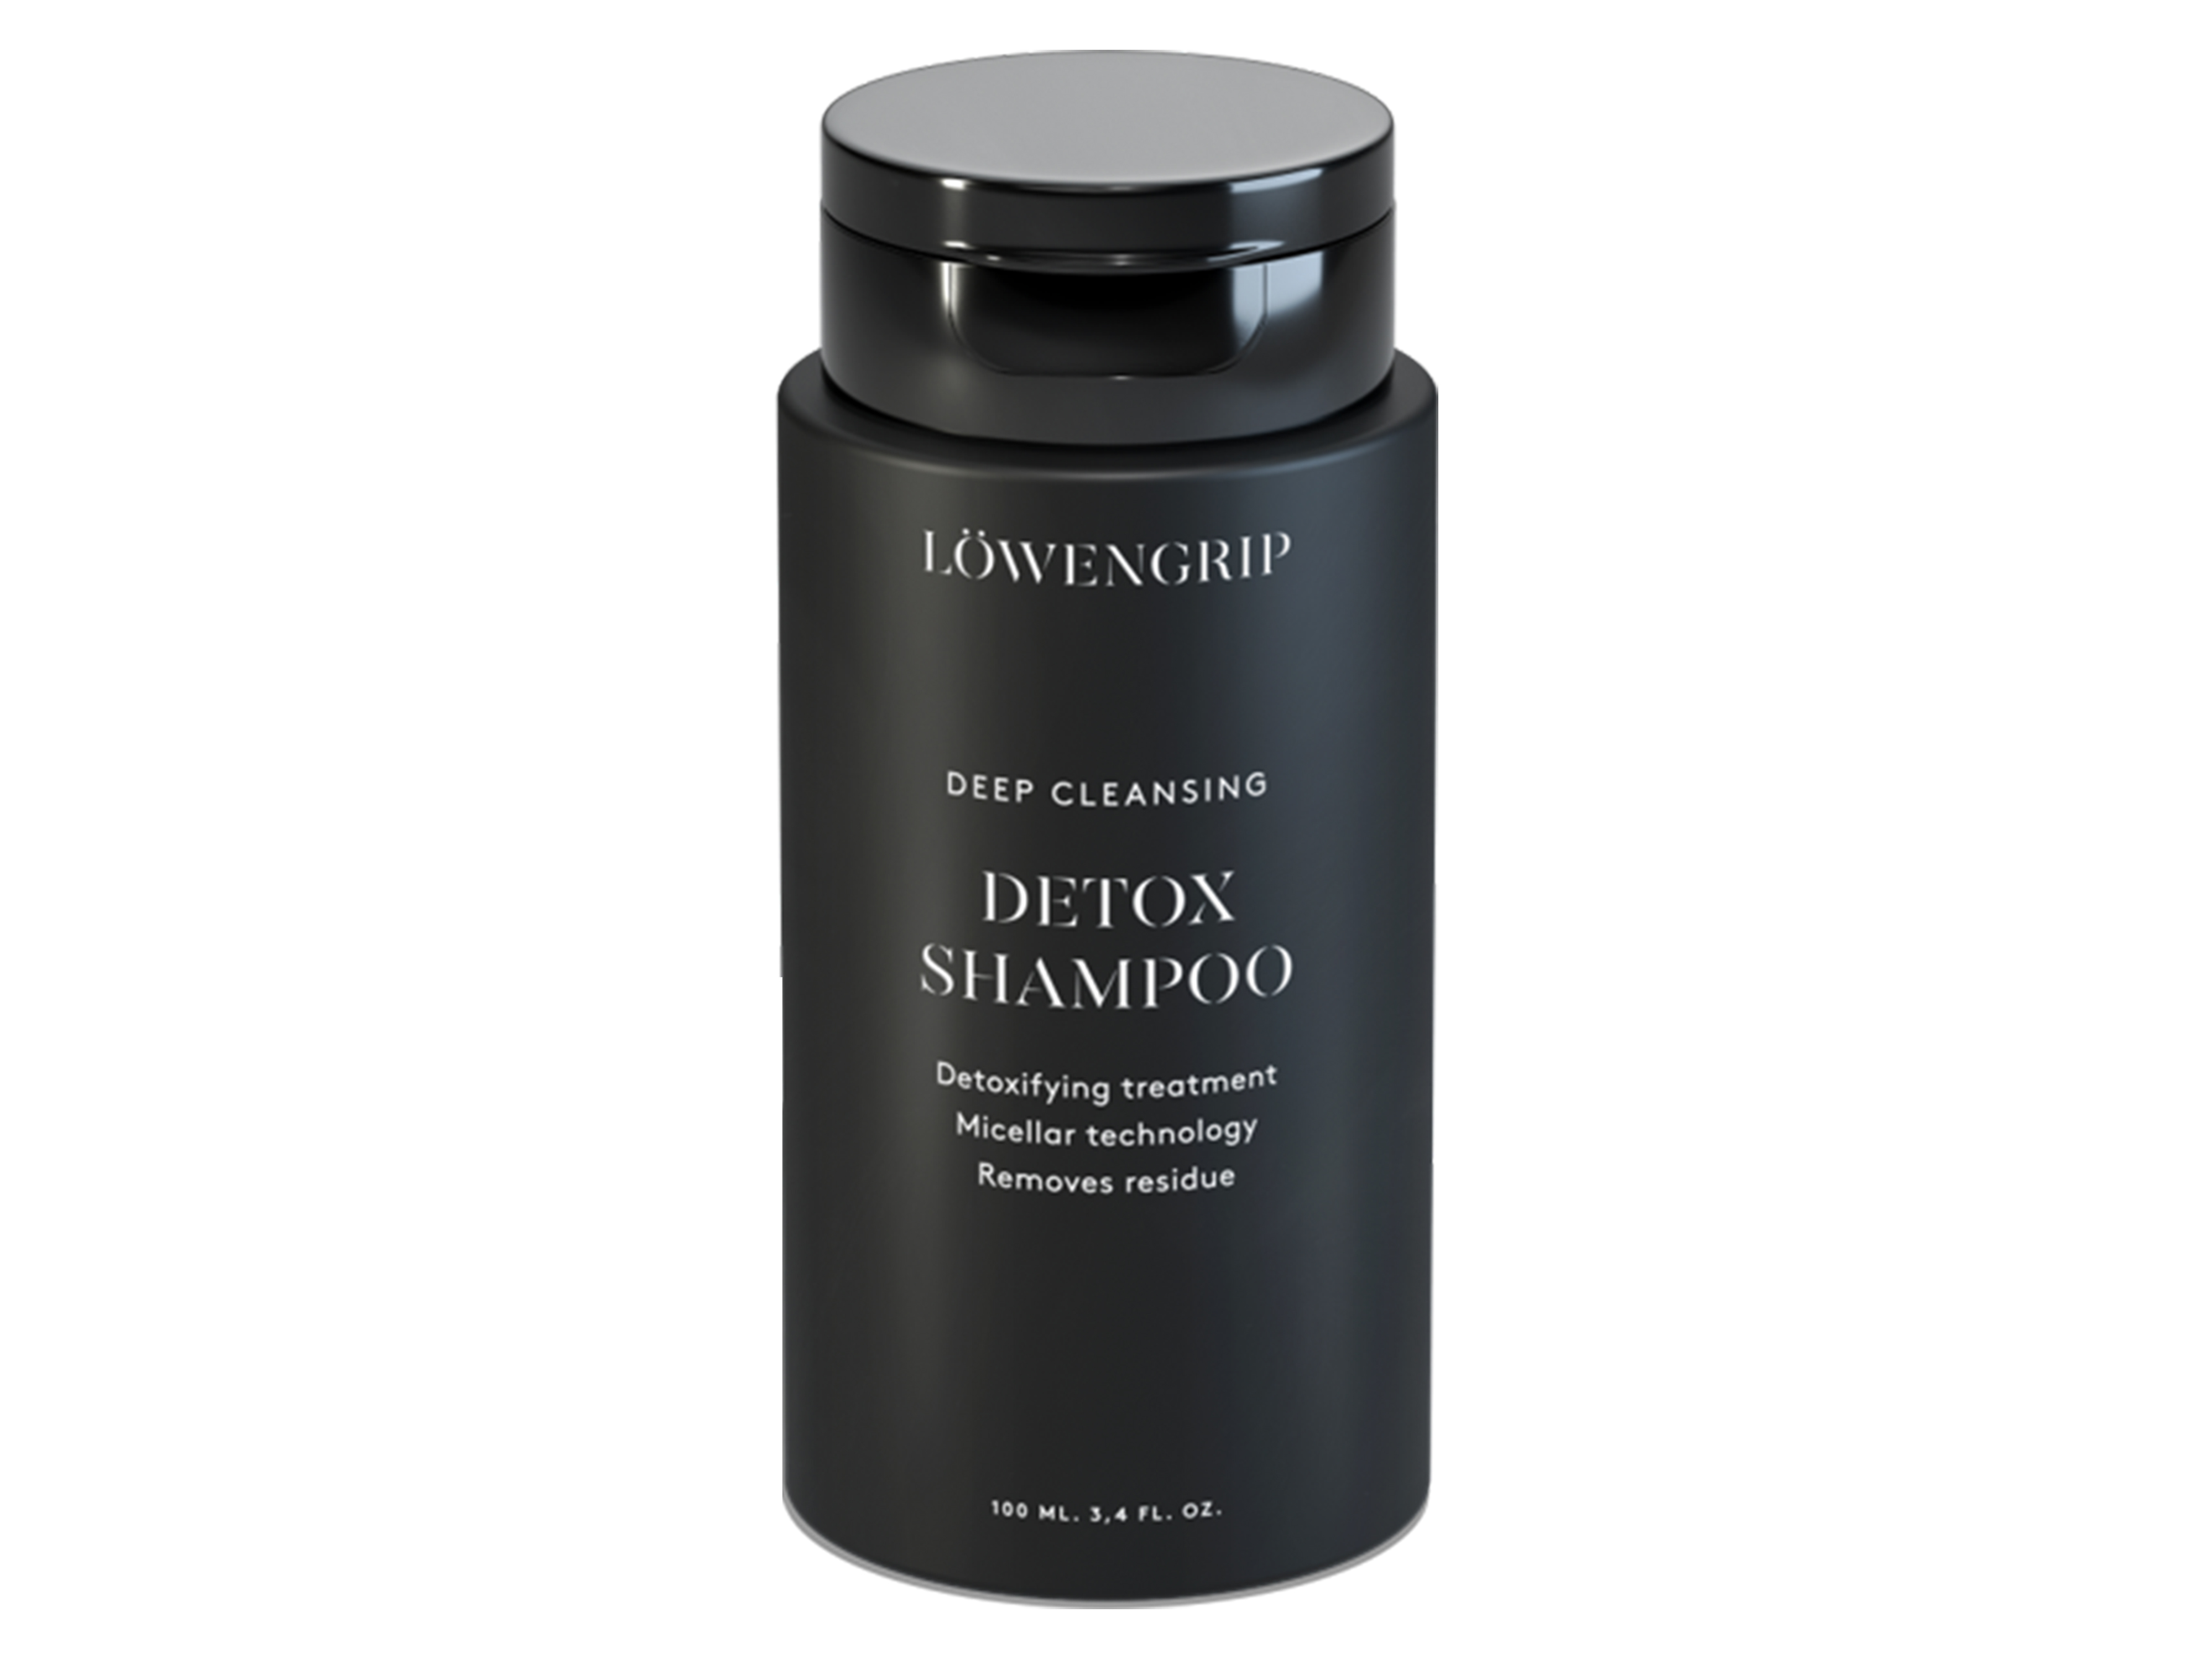 Löwengrip Deep Cleansing Detox Shampoo, 100 ml